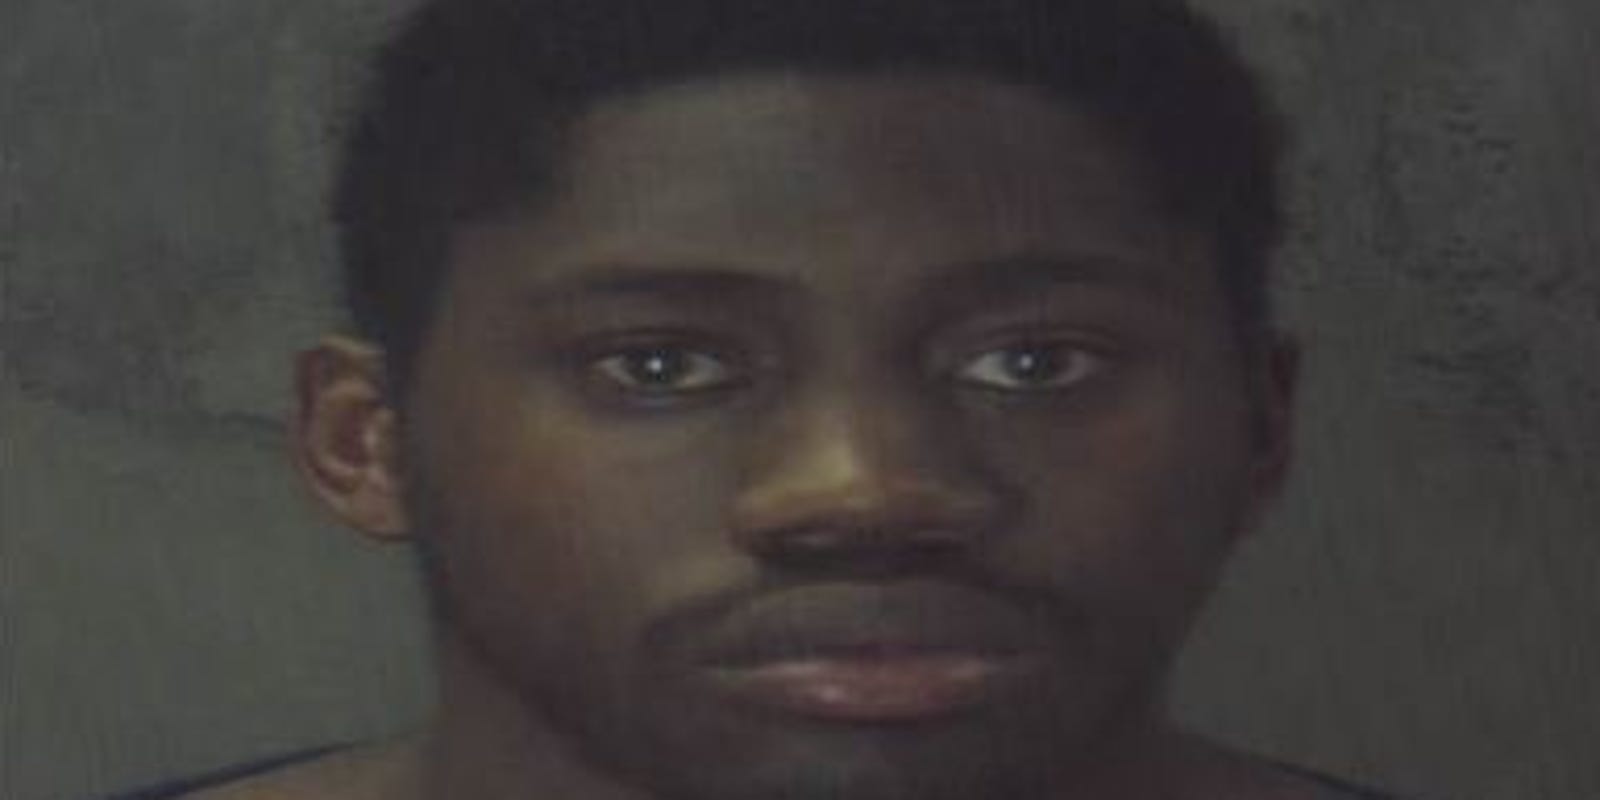 Decatur man charged in videotaped spring break sex assault